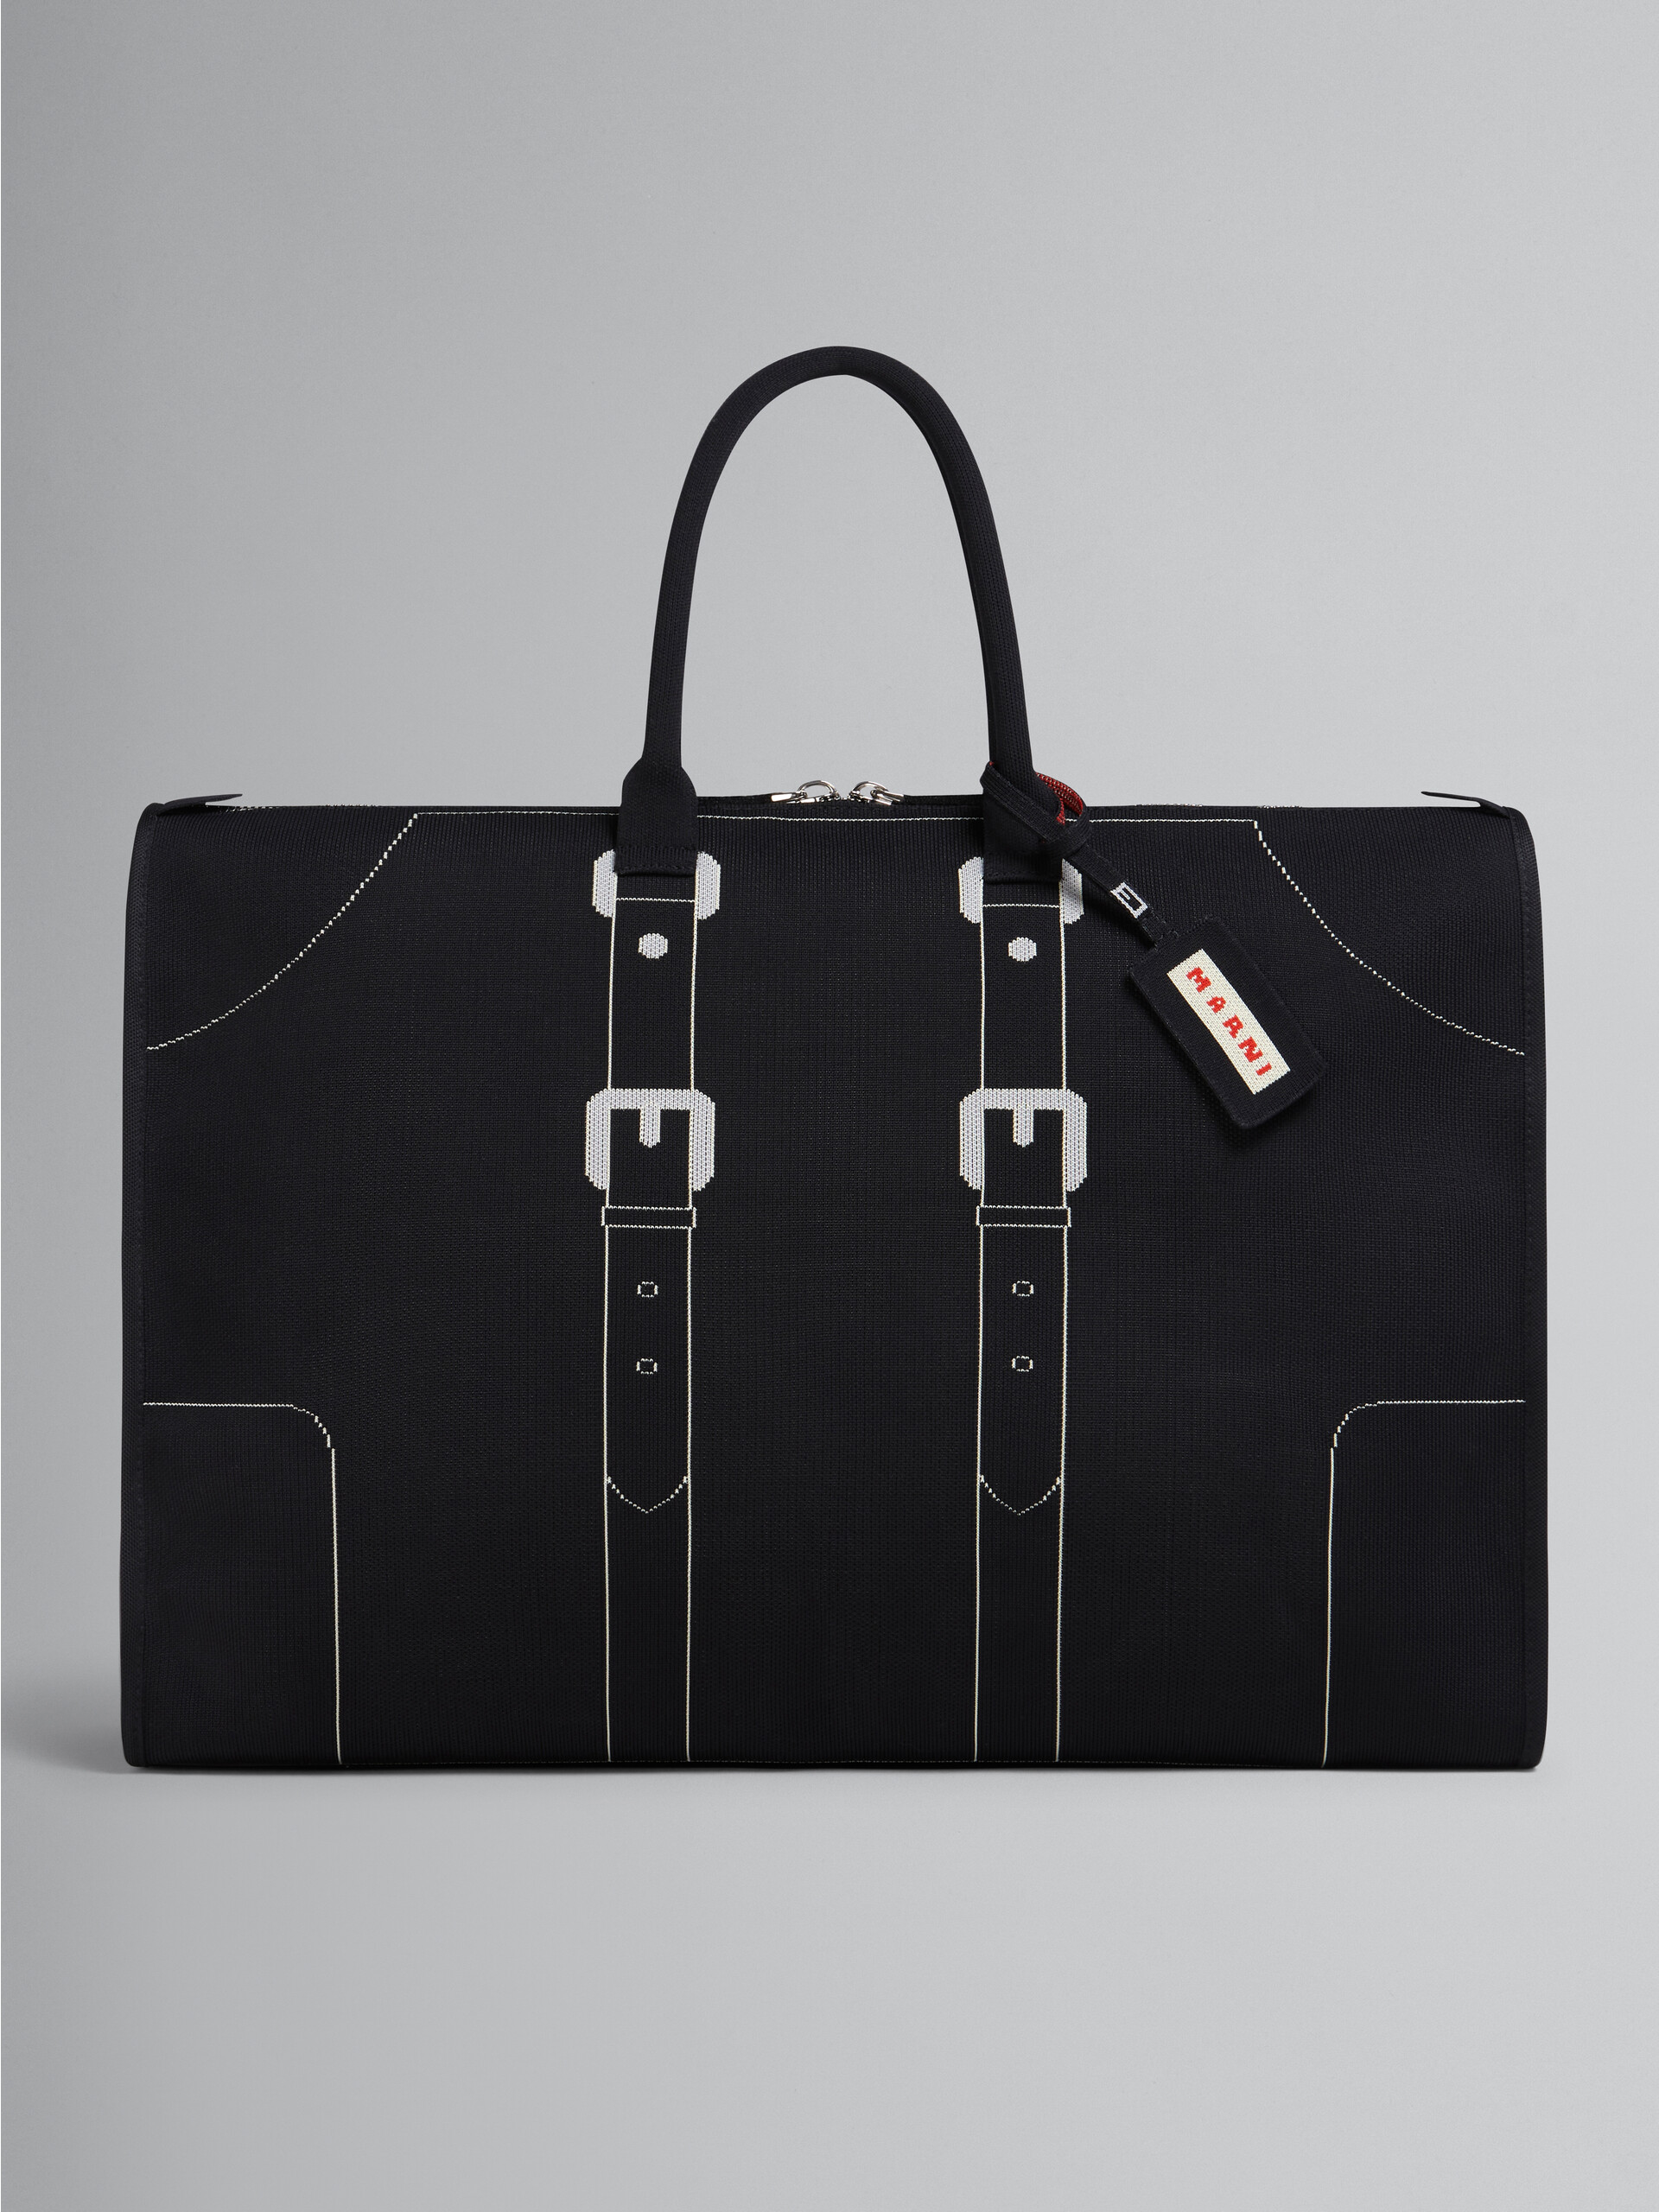 Black trompe-l'œil jacquard travel bag - Travelling Bag - Image 1